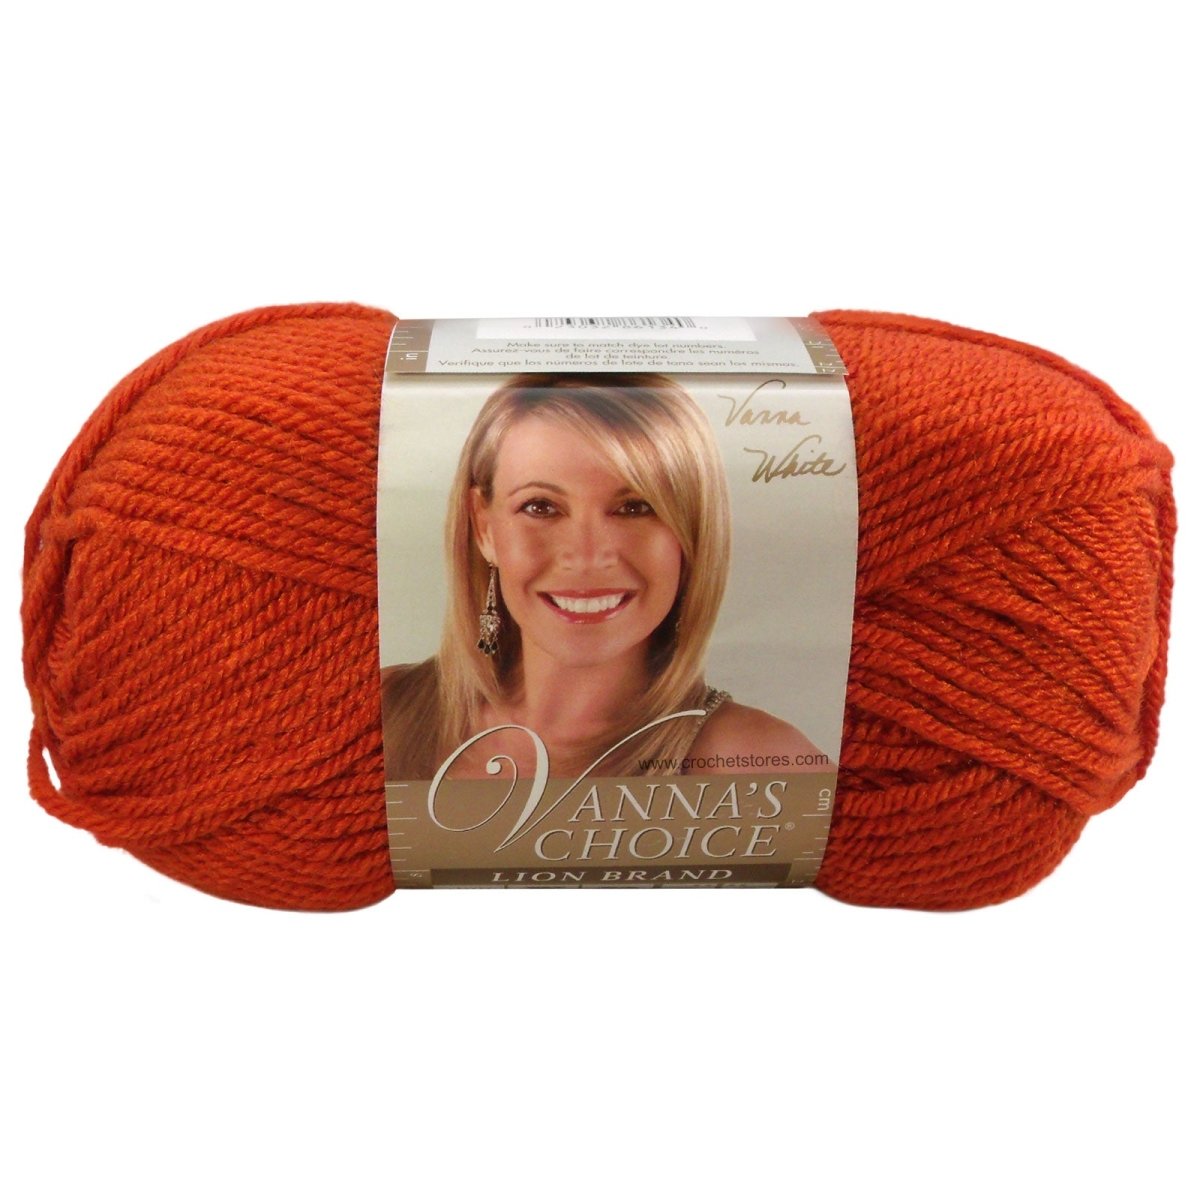 VANNAS CHOICE - Crochetstores860-134